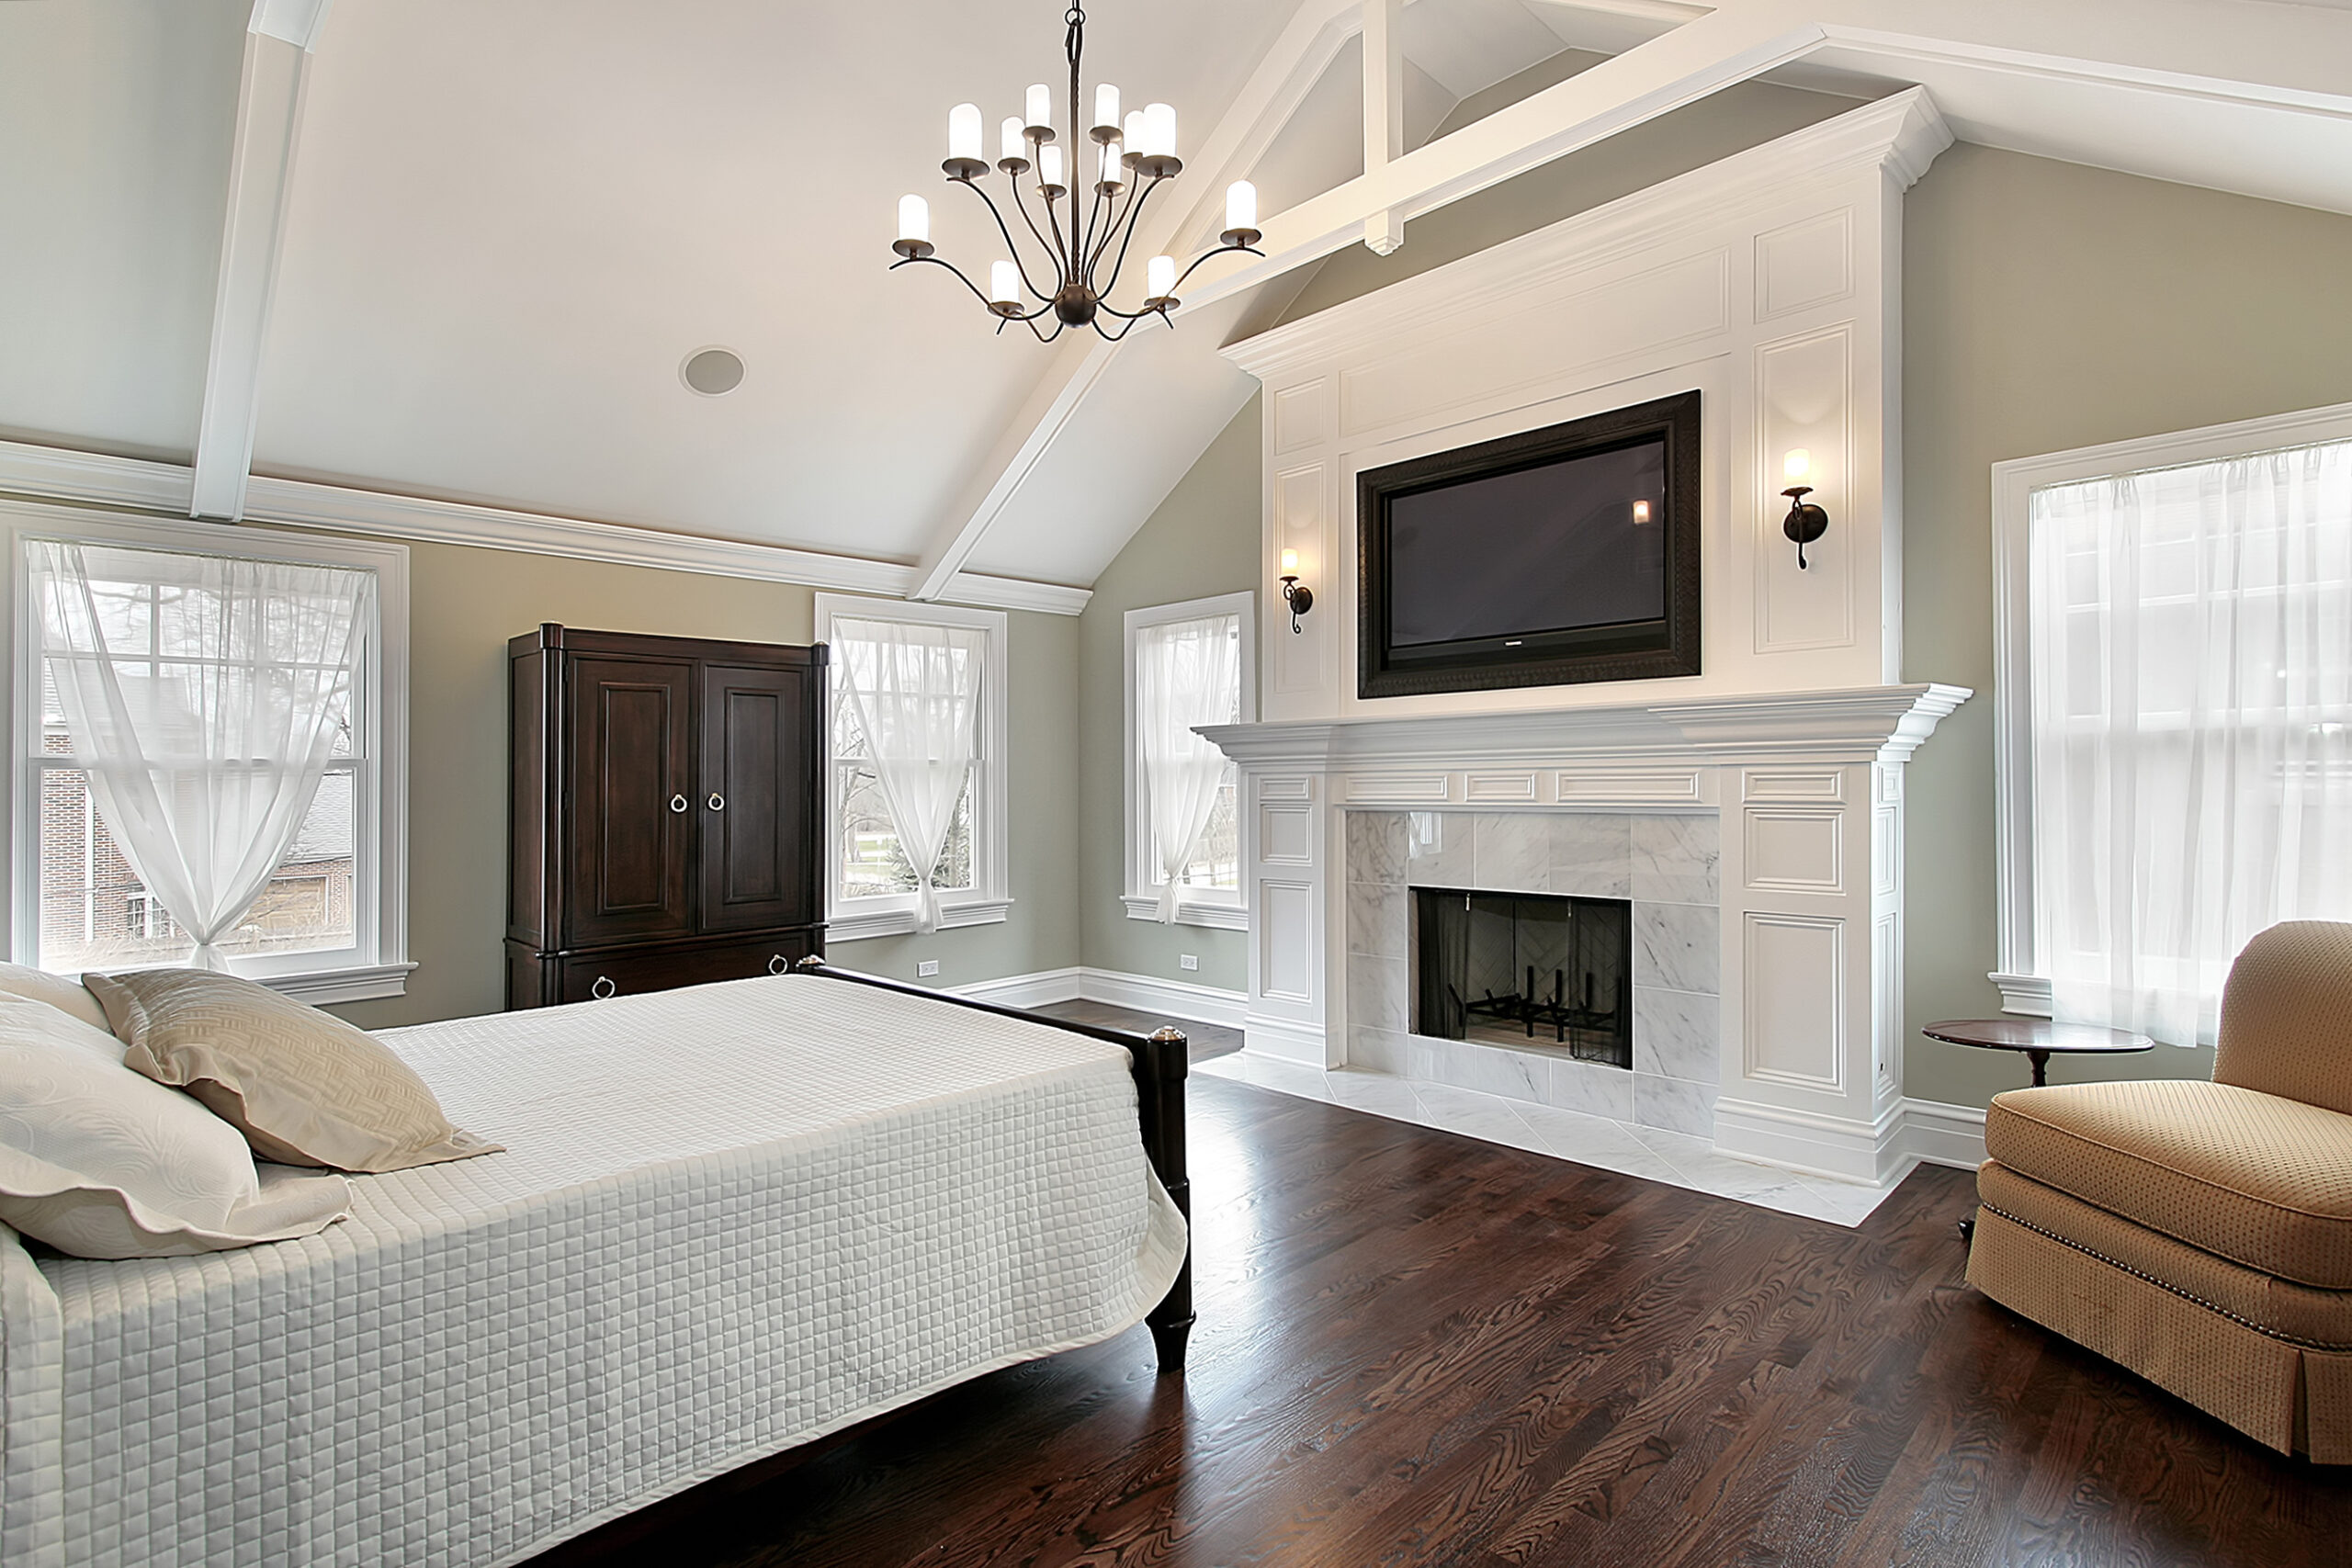 ColeVal Construction Utah Custom Homes master suites
Relaxing master bedroom